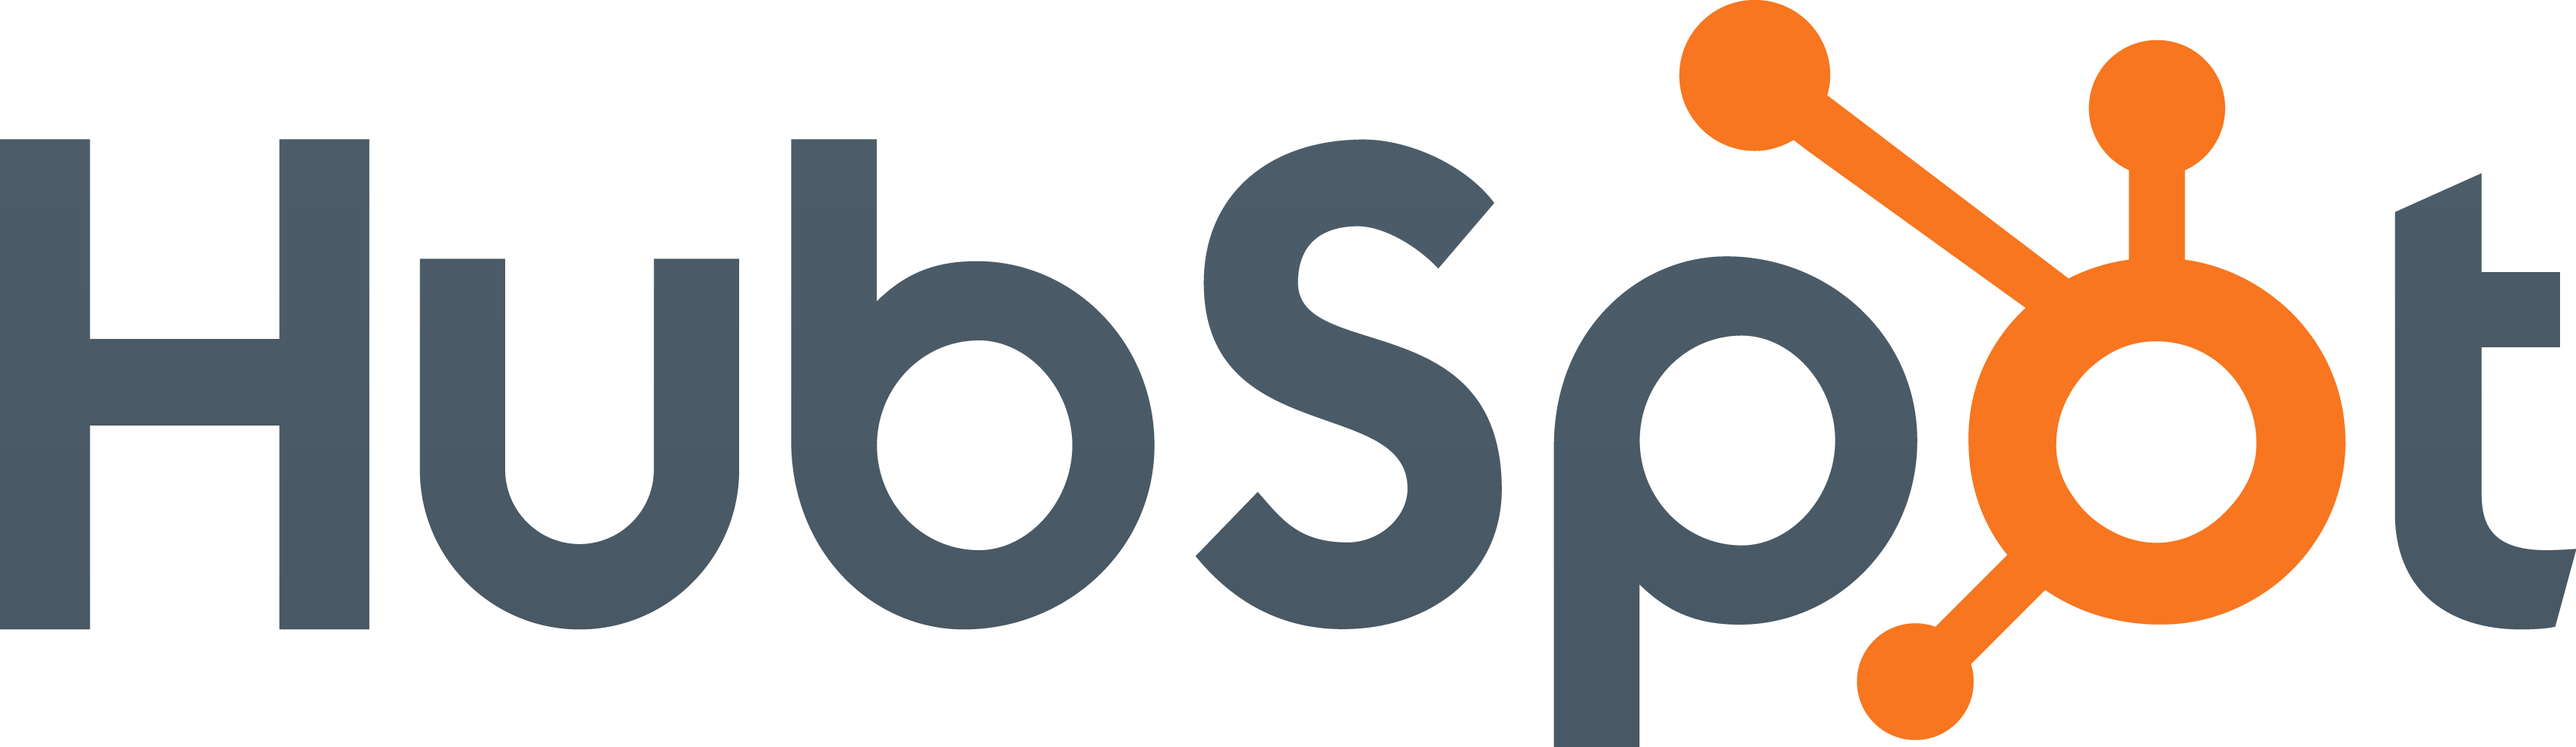 Hubspot-Image-Logo.png